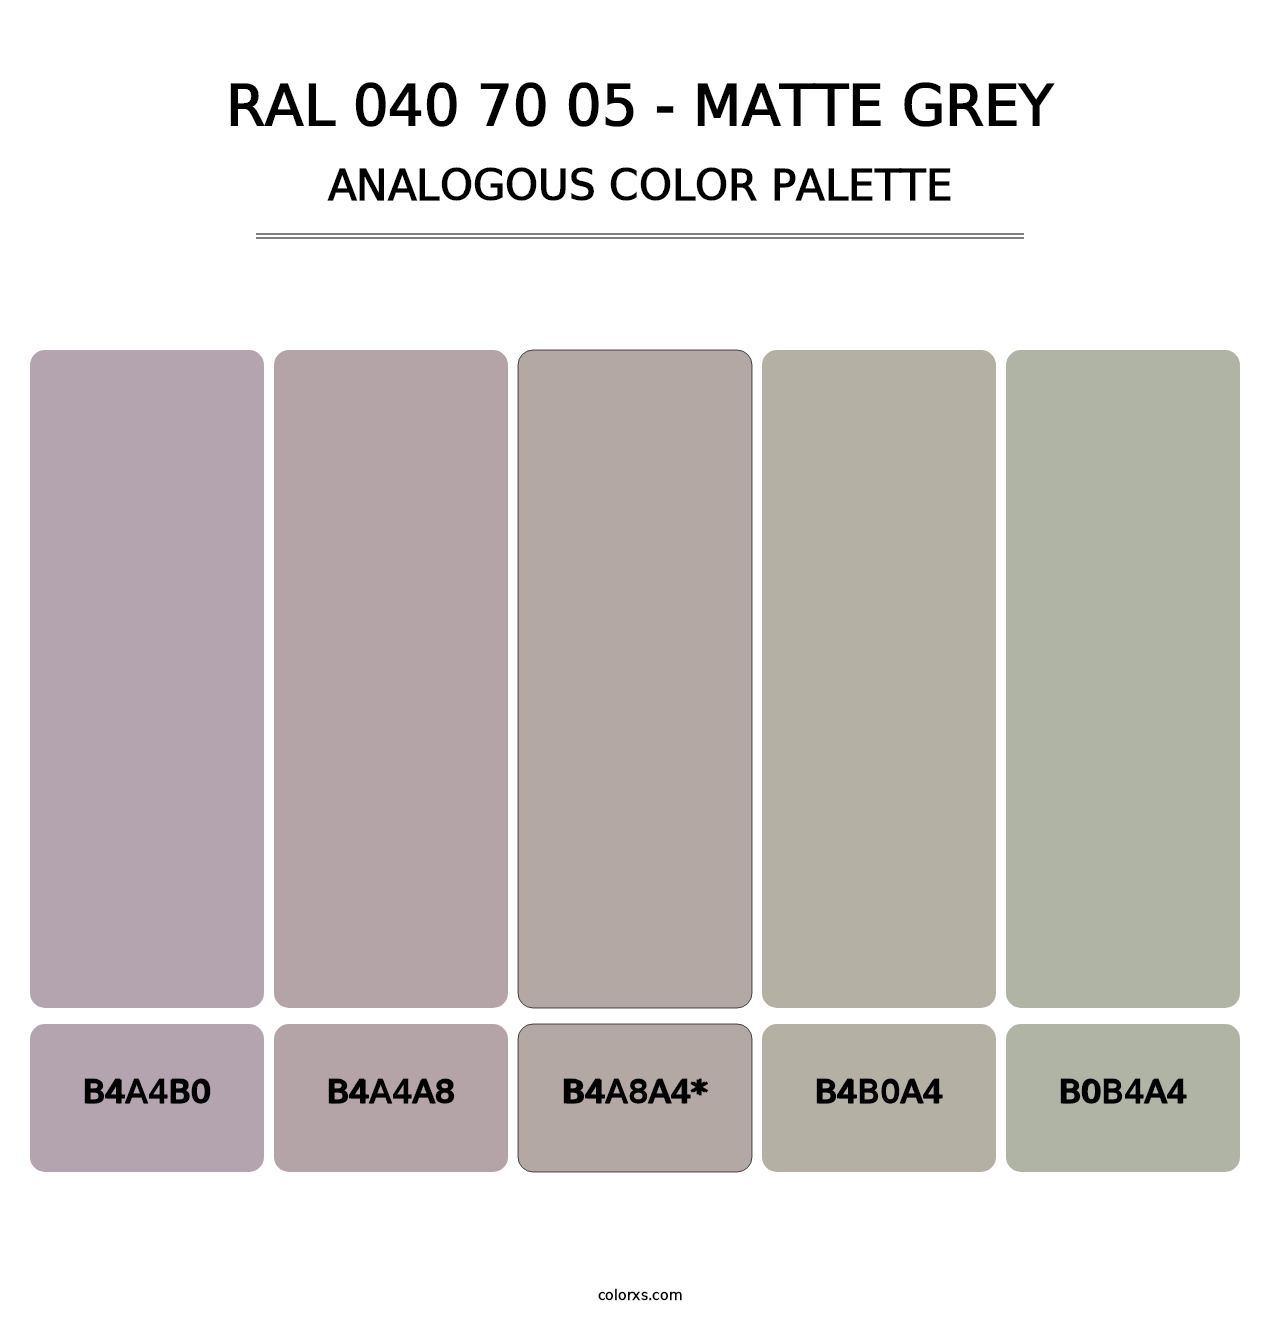 RAL 040 70 05 - Matte Grey - Analogous Color Palette